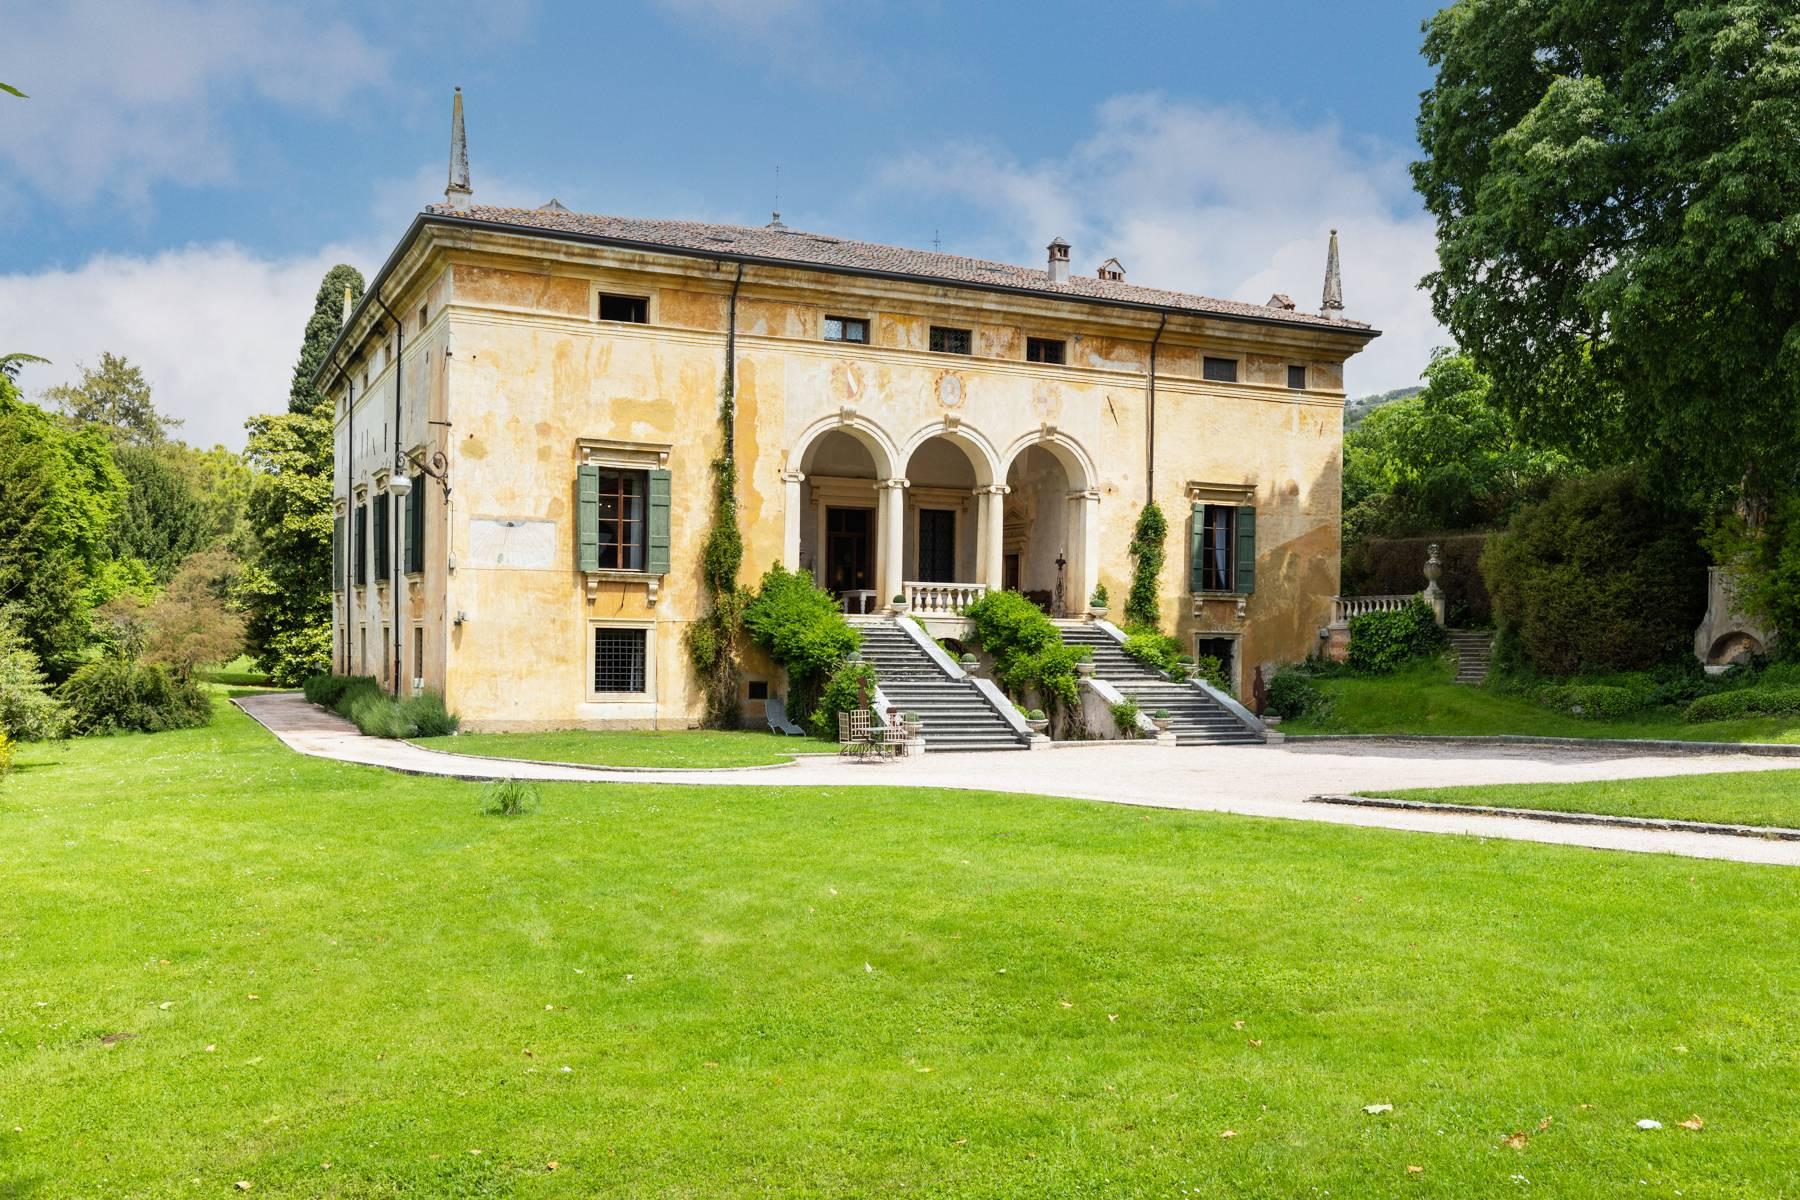 Fascinating Venetian villa just a few kilometers from Verona - 5